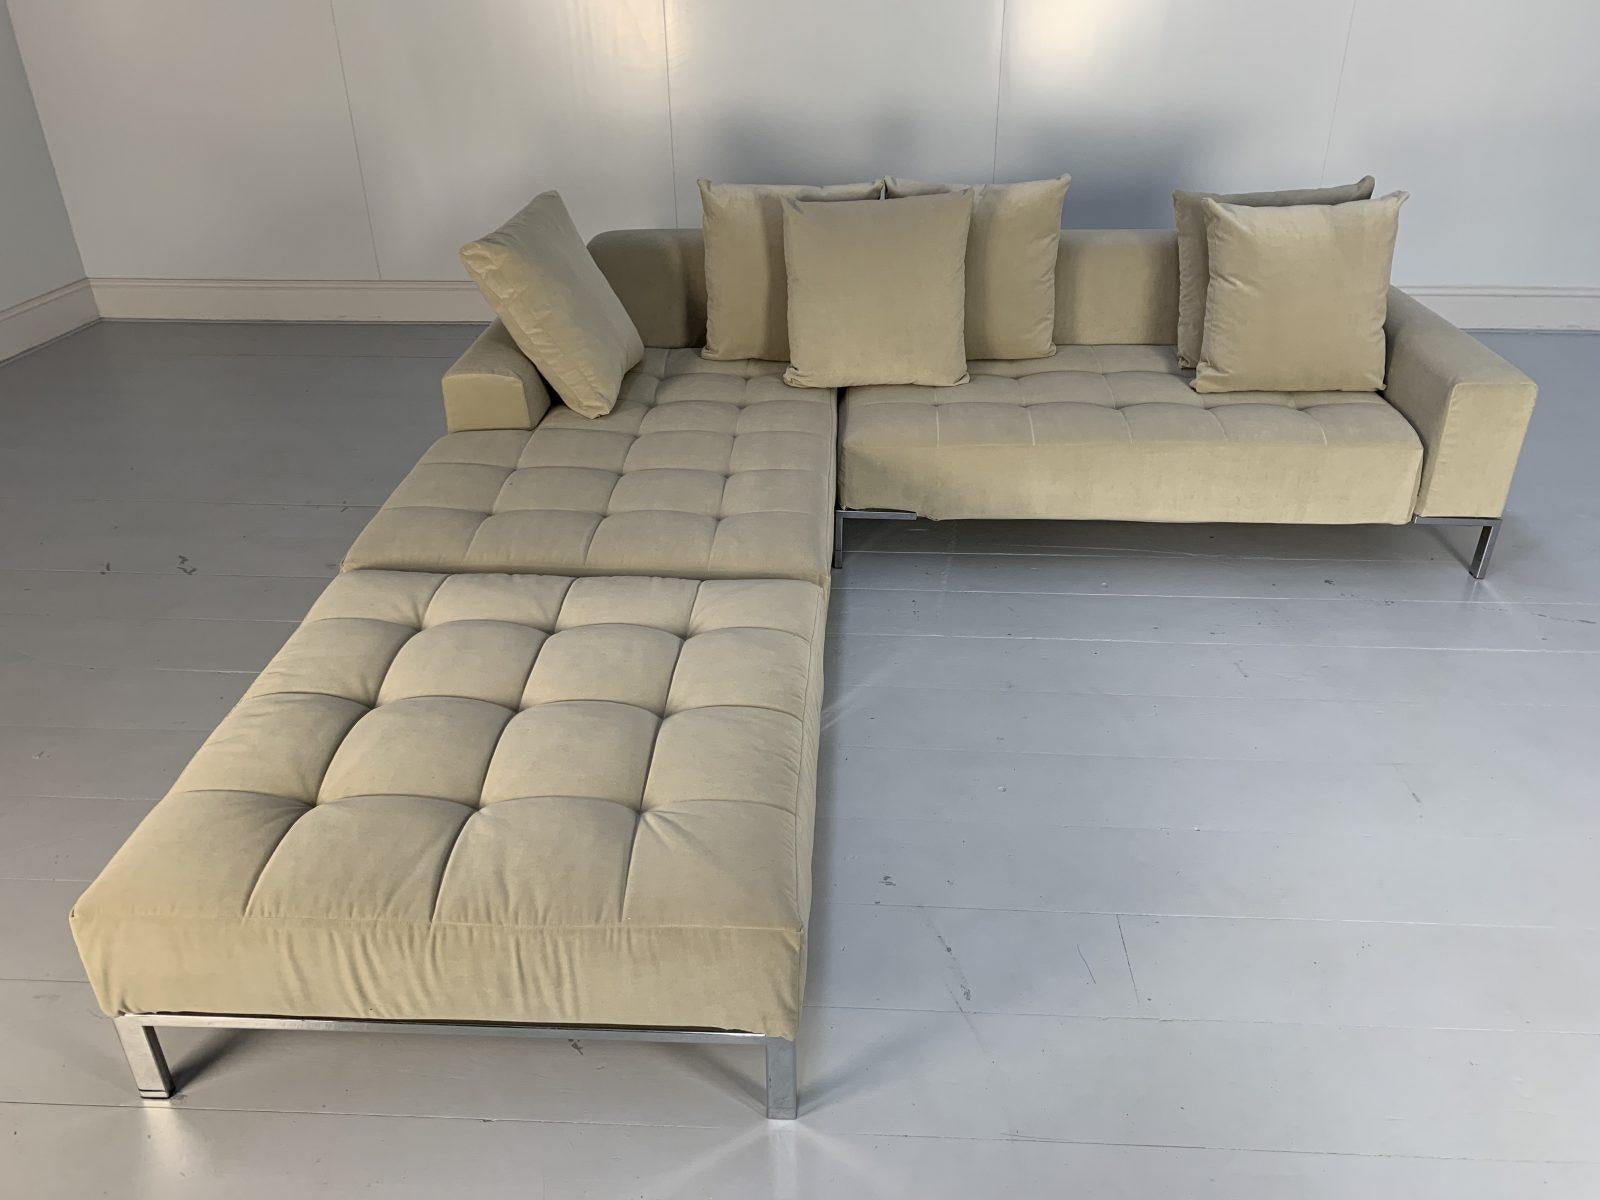 l shape sofa with ottoman